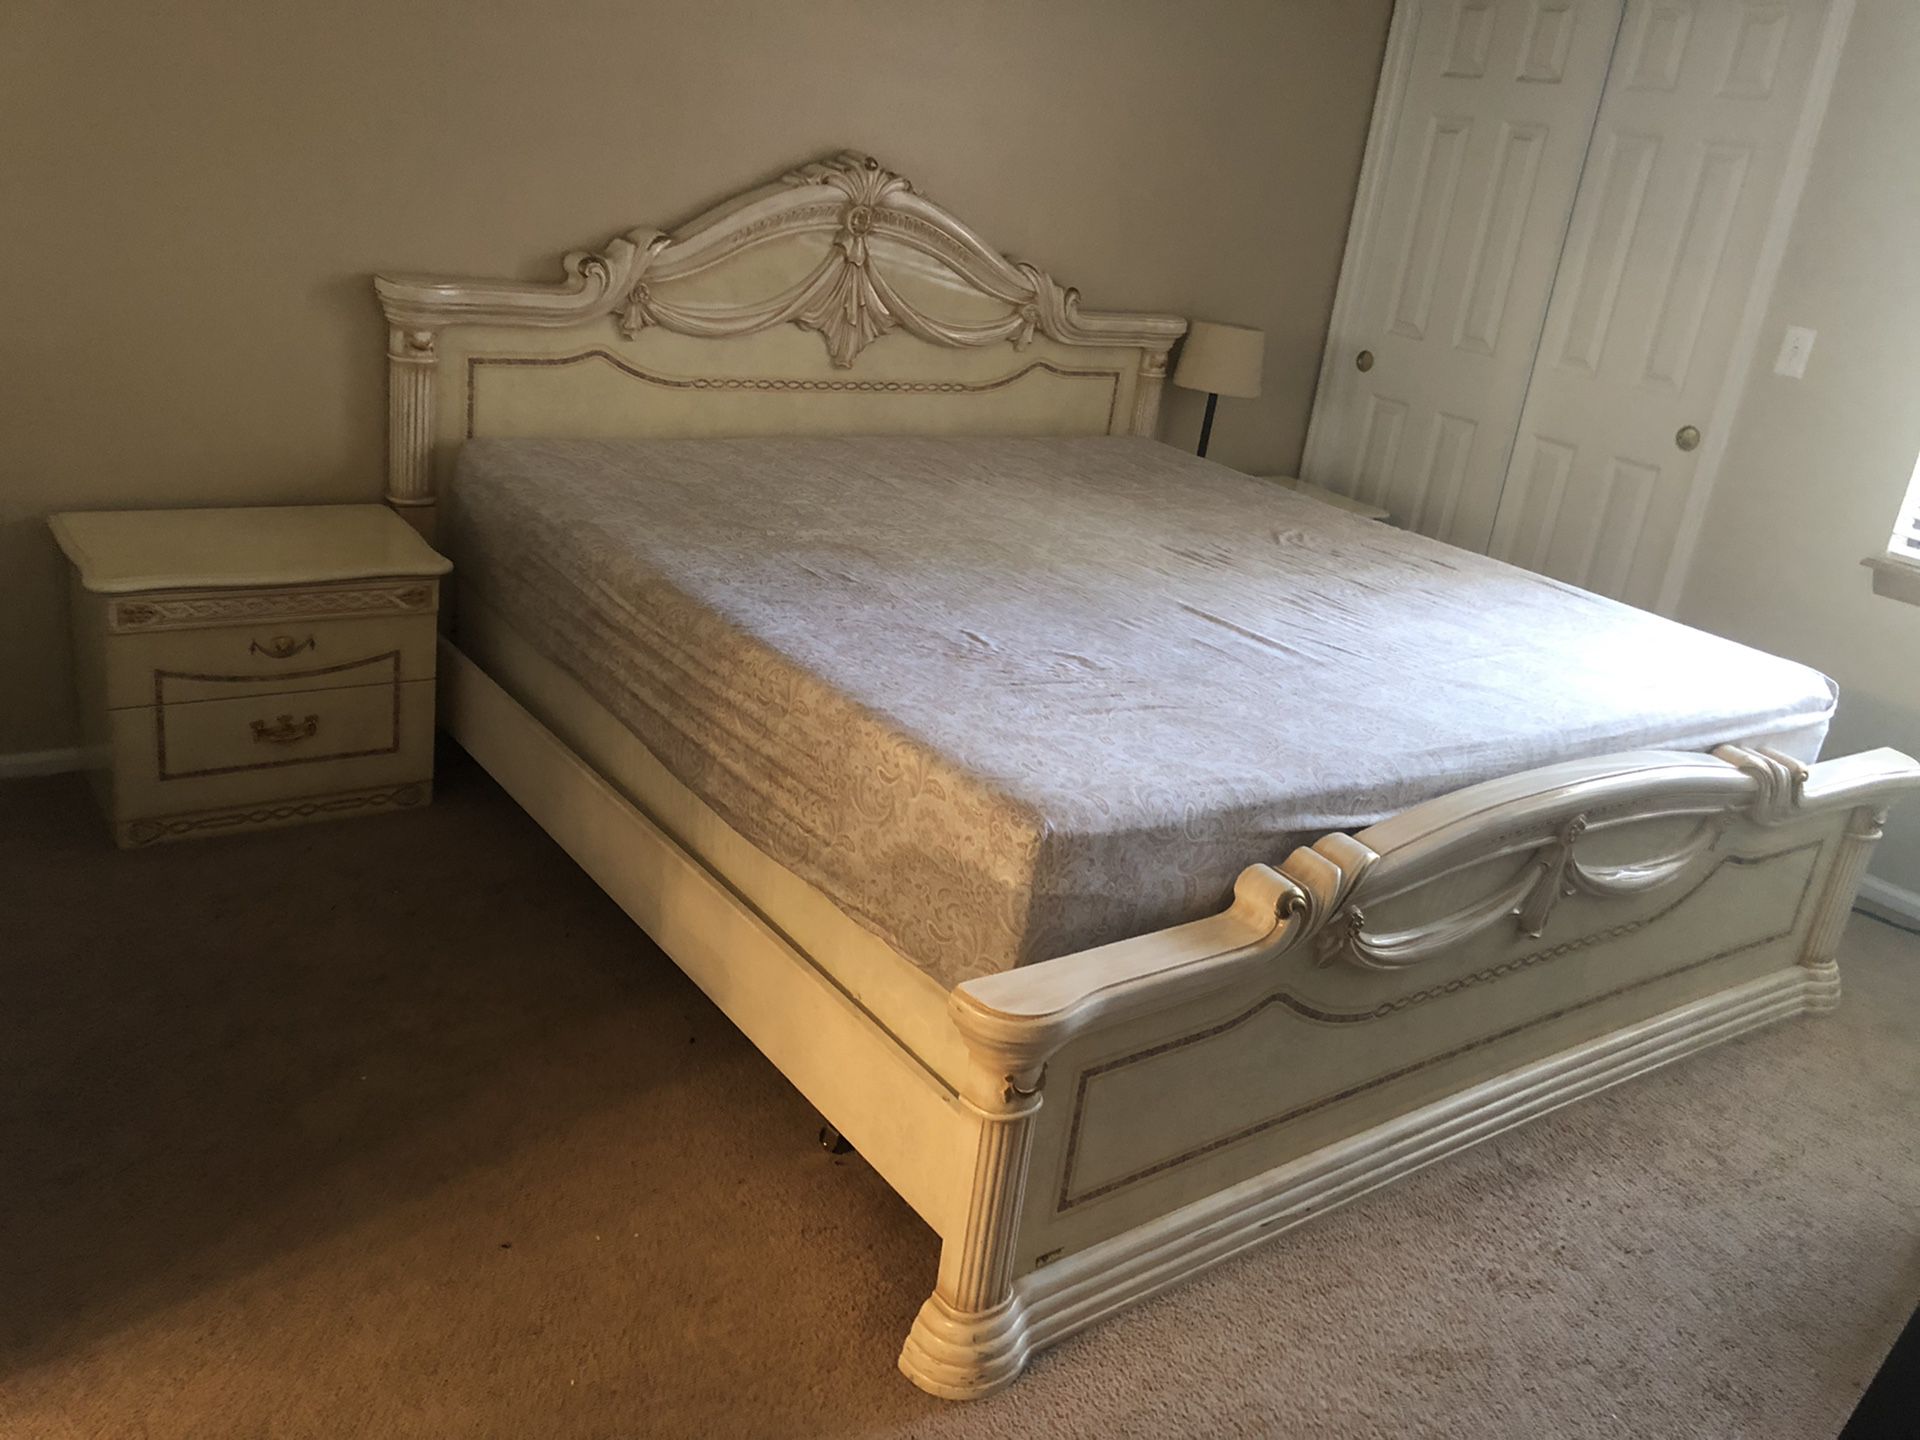 King sized bedroom set